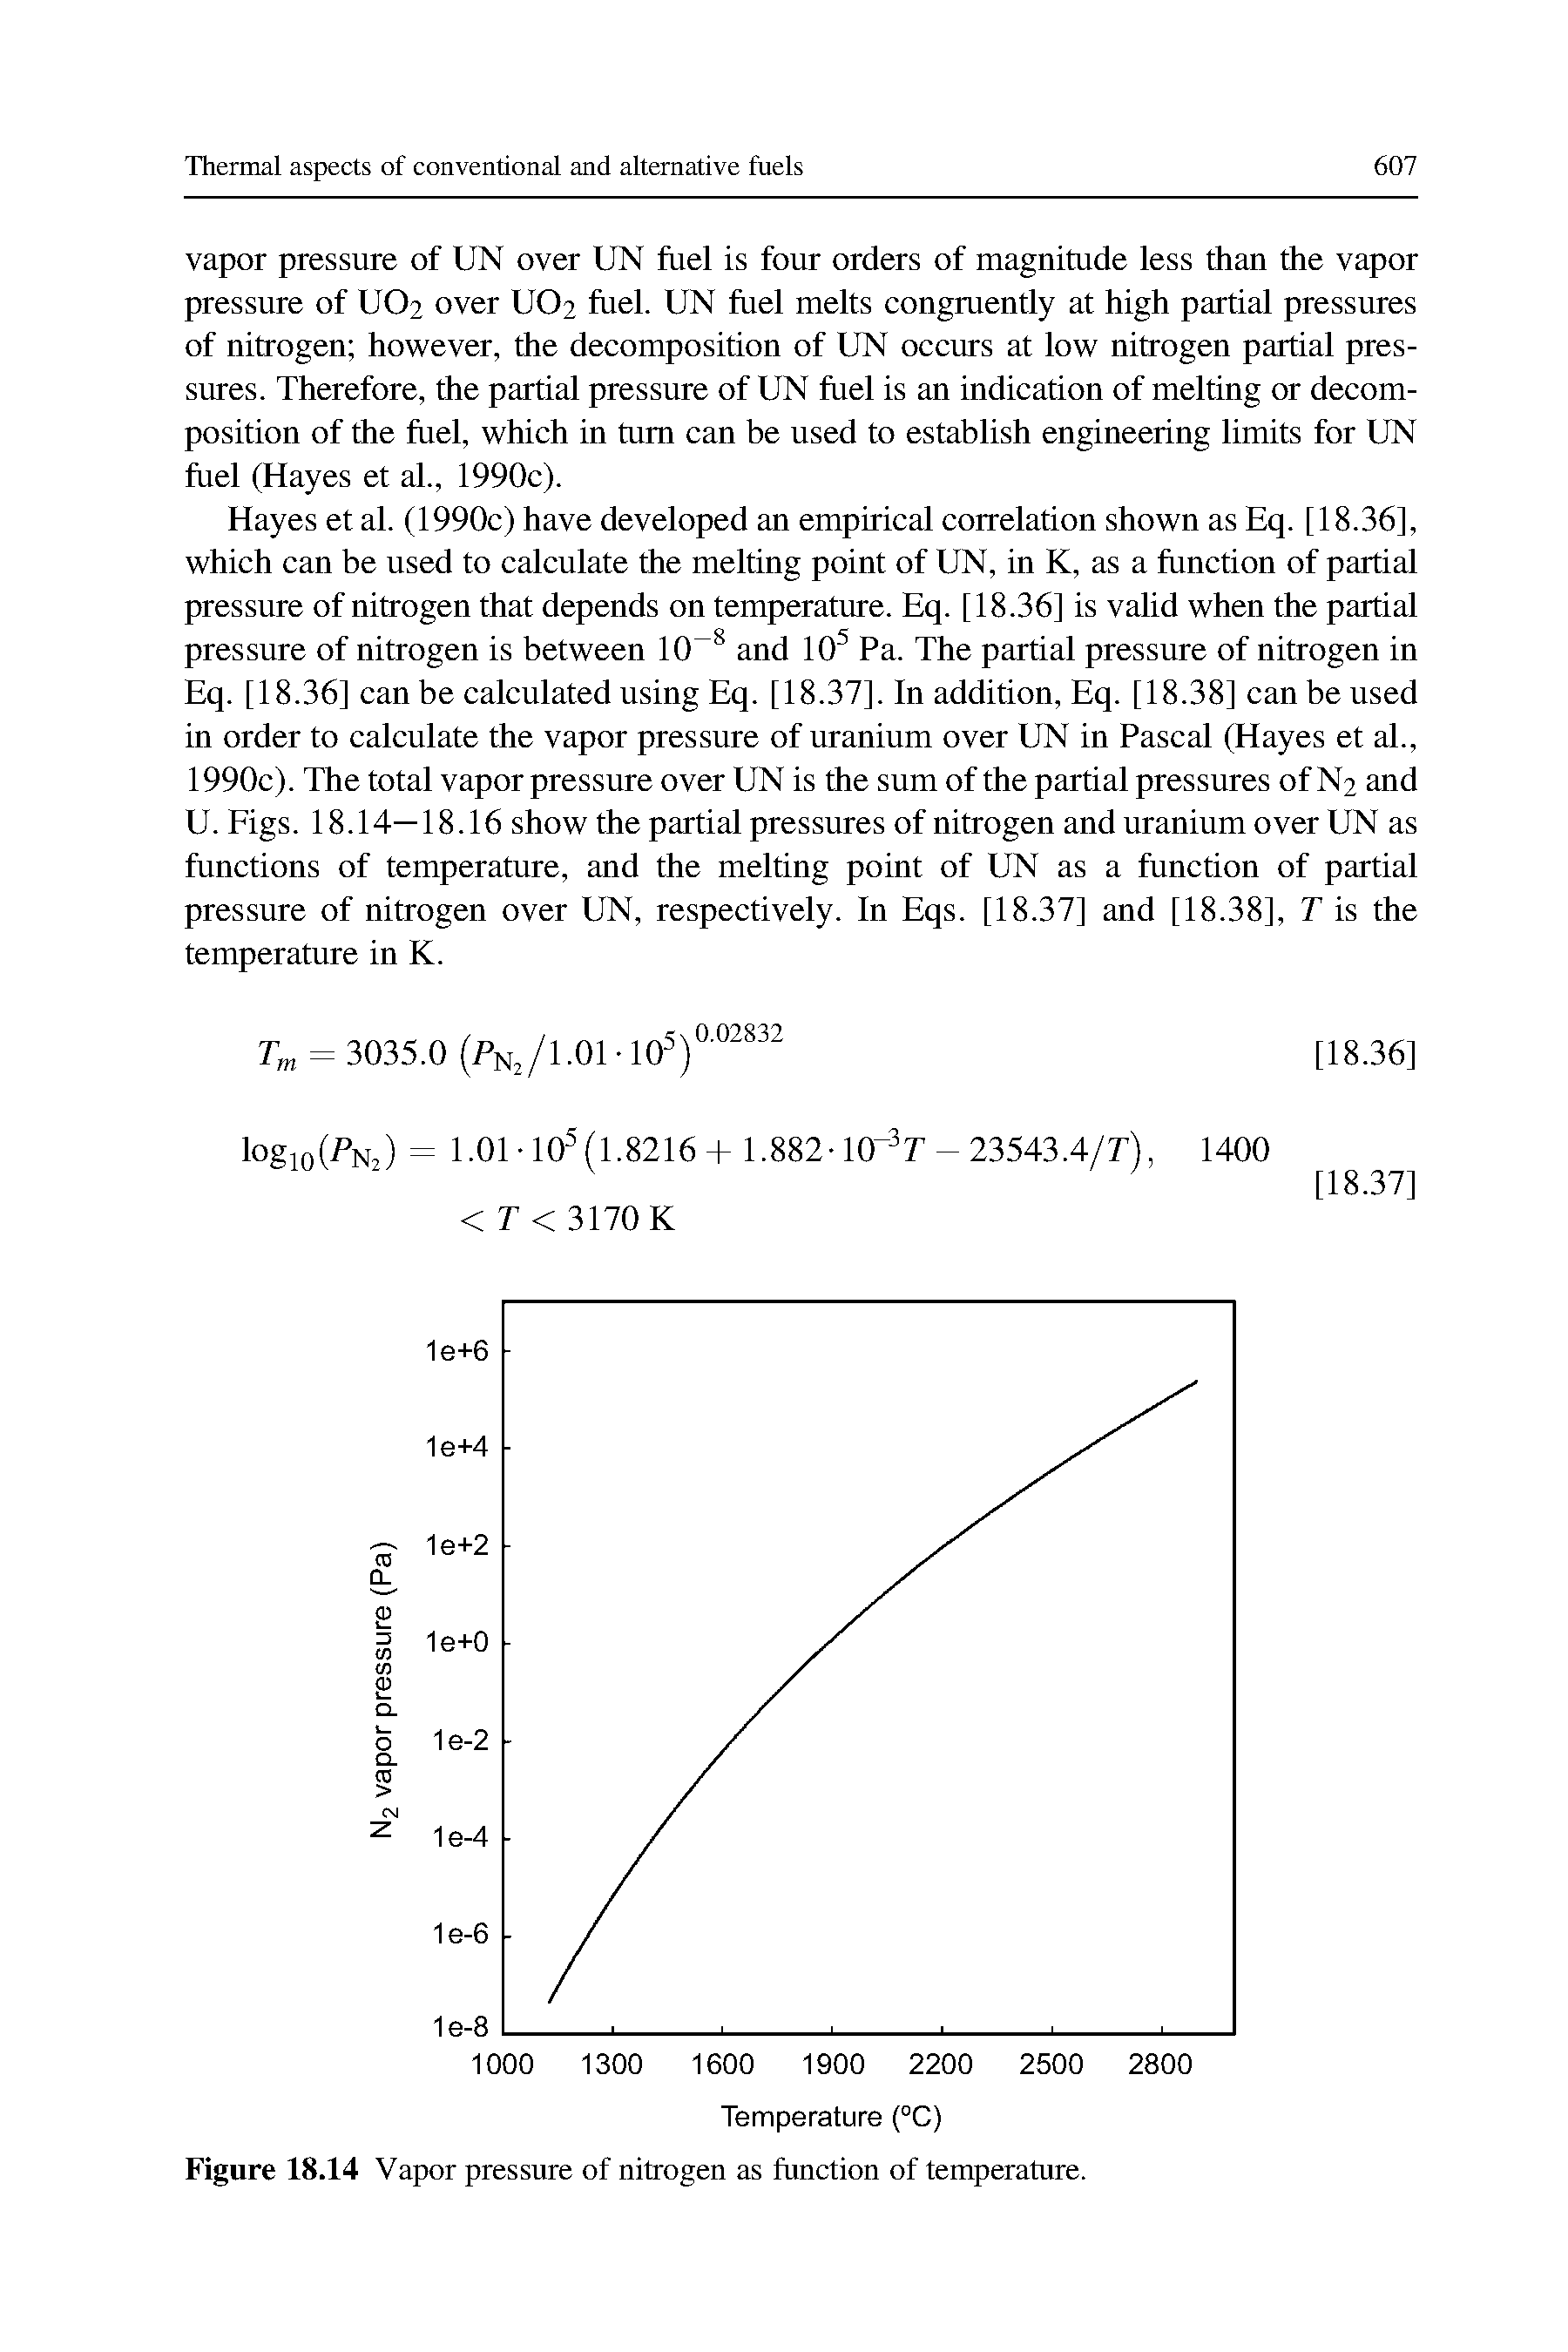 Figure 18.14 Vapor pressure of nitrogen as function of temperature.